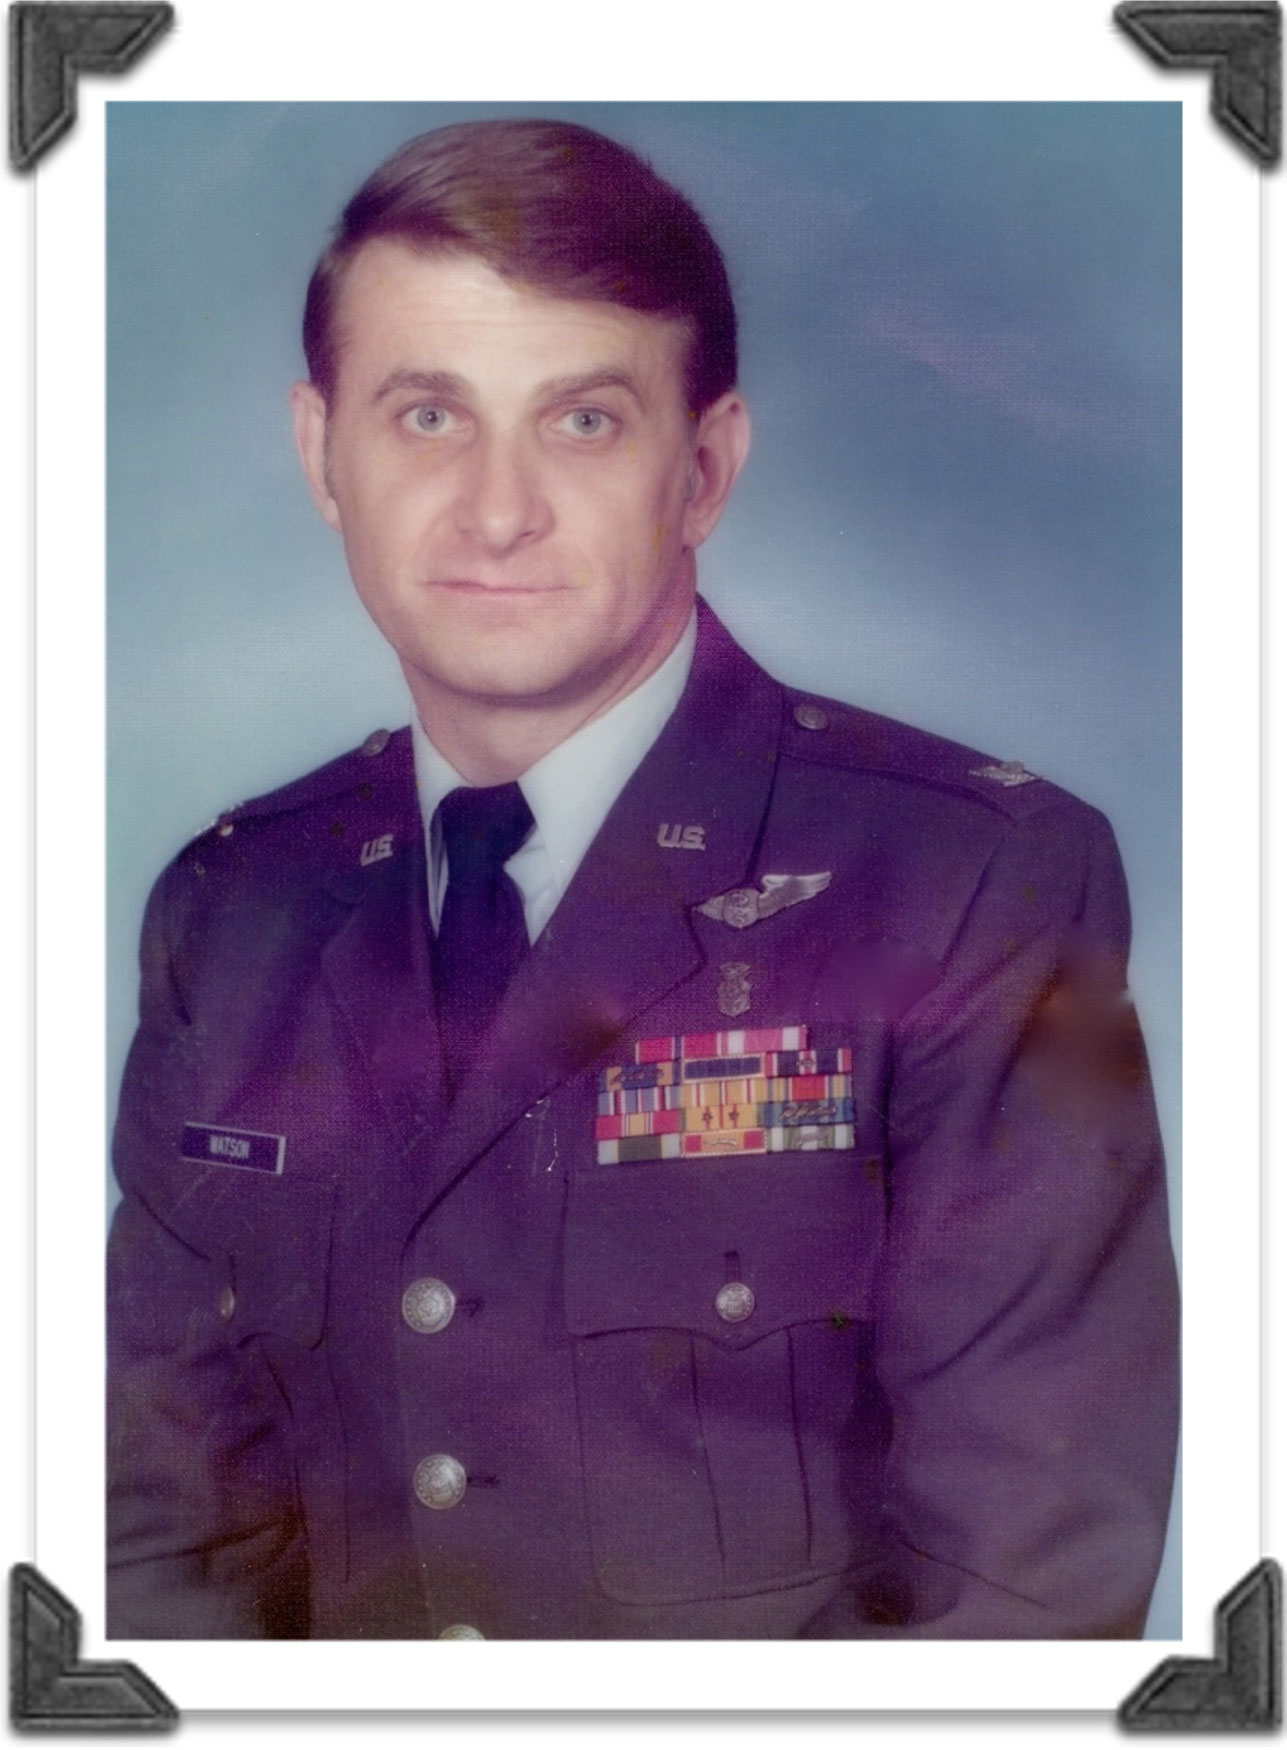 Herb in Air Force uniform